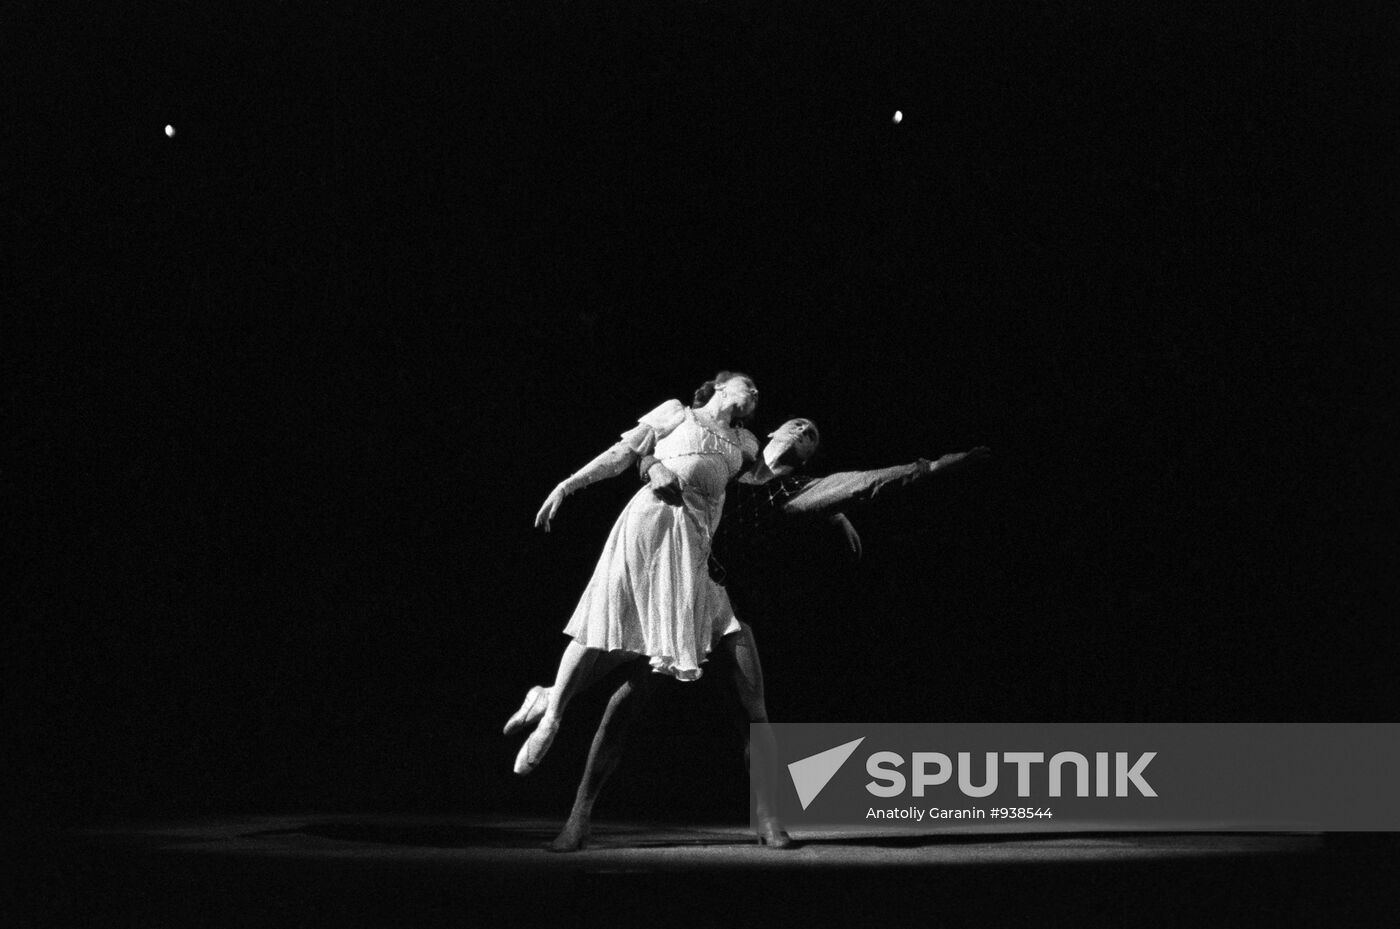 Ballet dancers Galina Ulanova and Konstantin Sergeyev